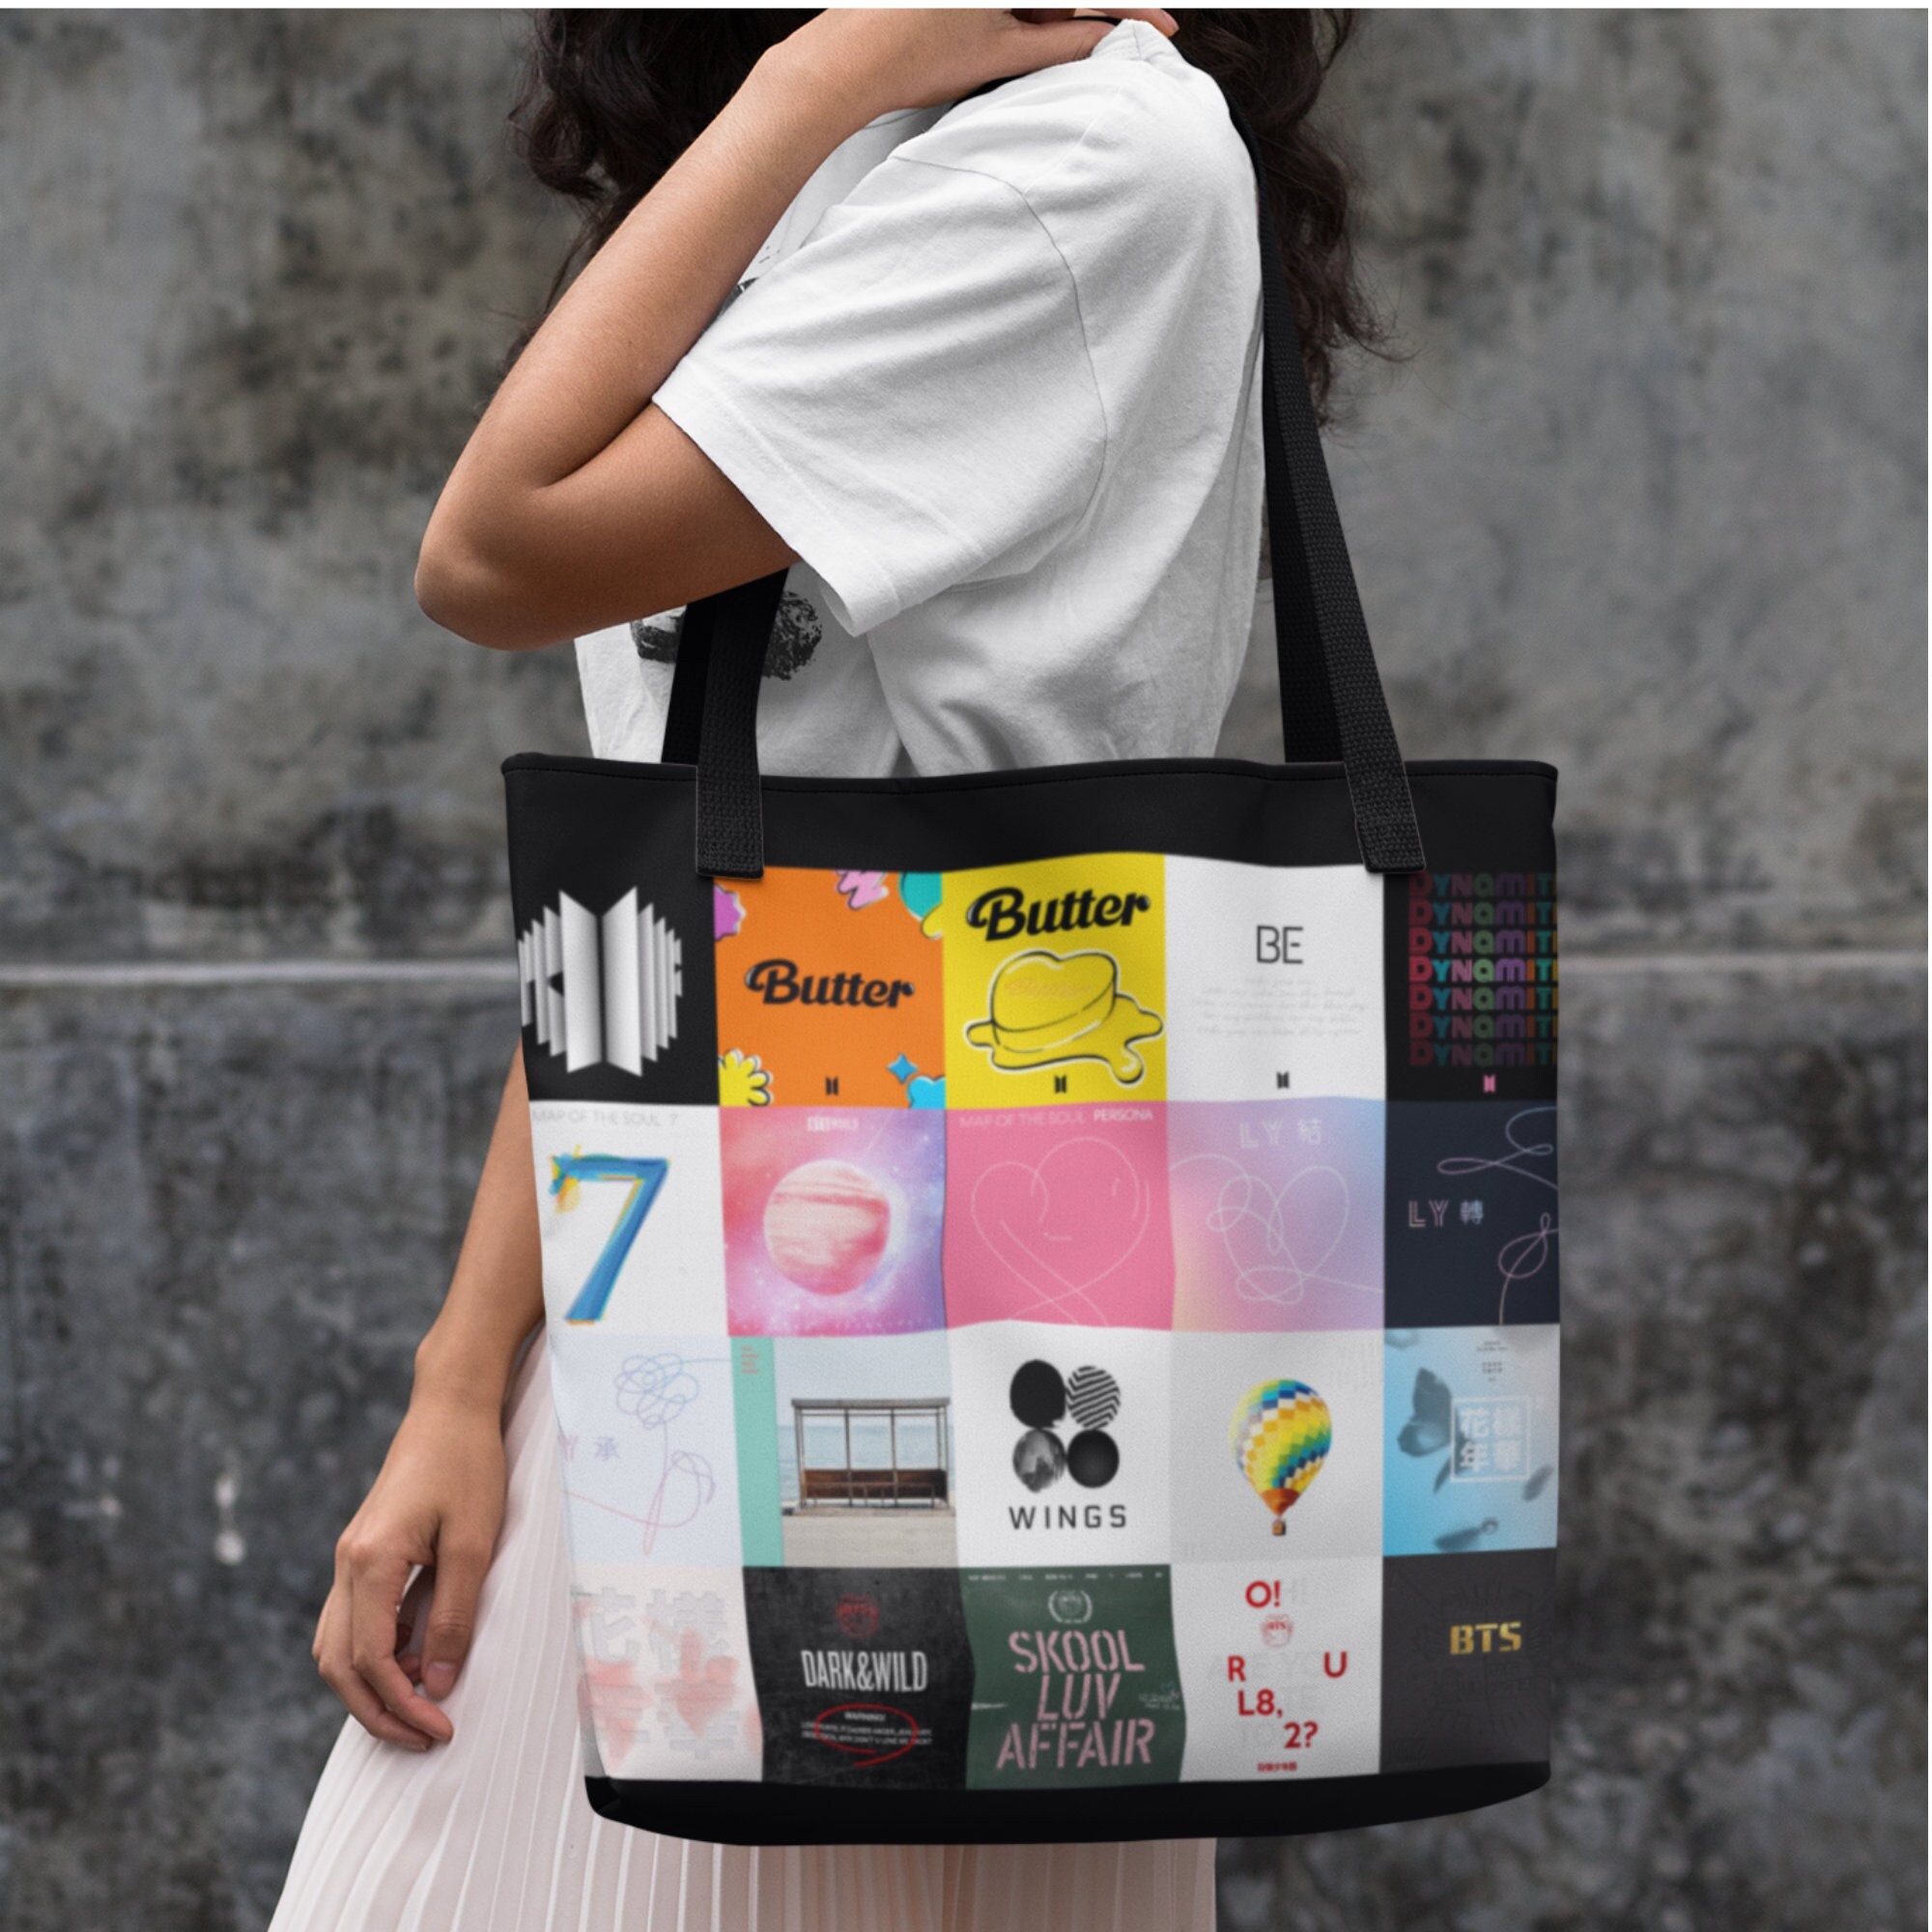 BTS' Suga-inspired classy bags for men